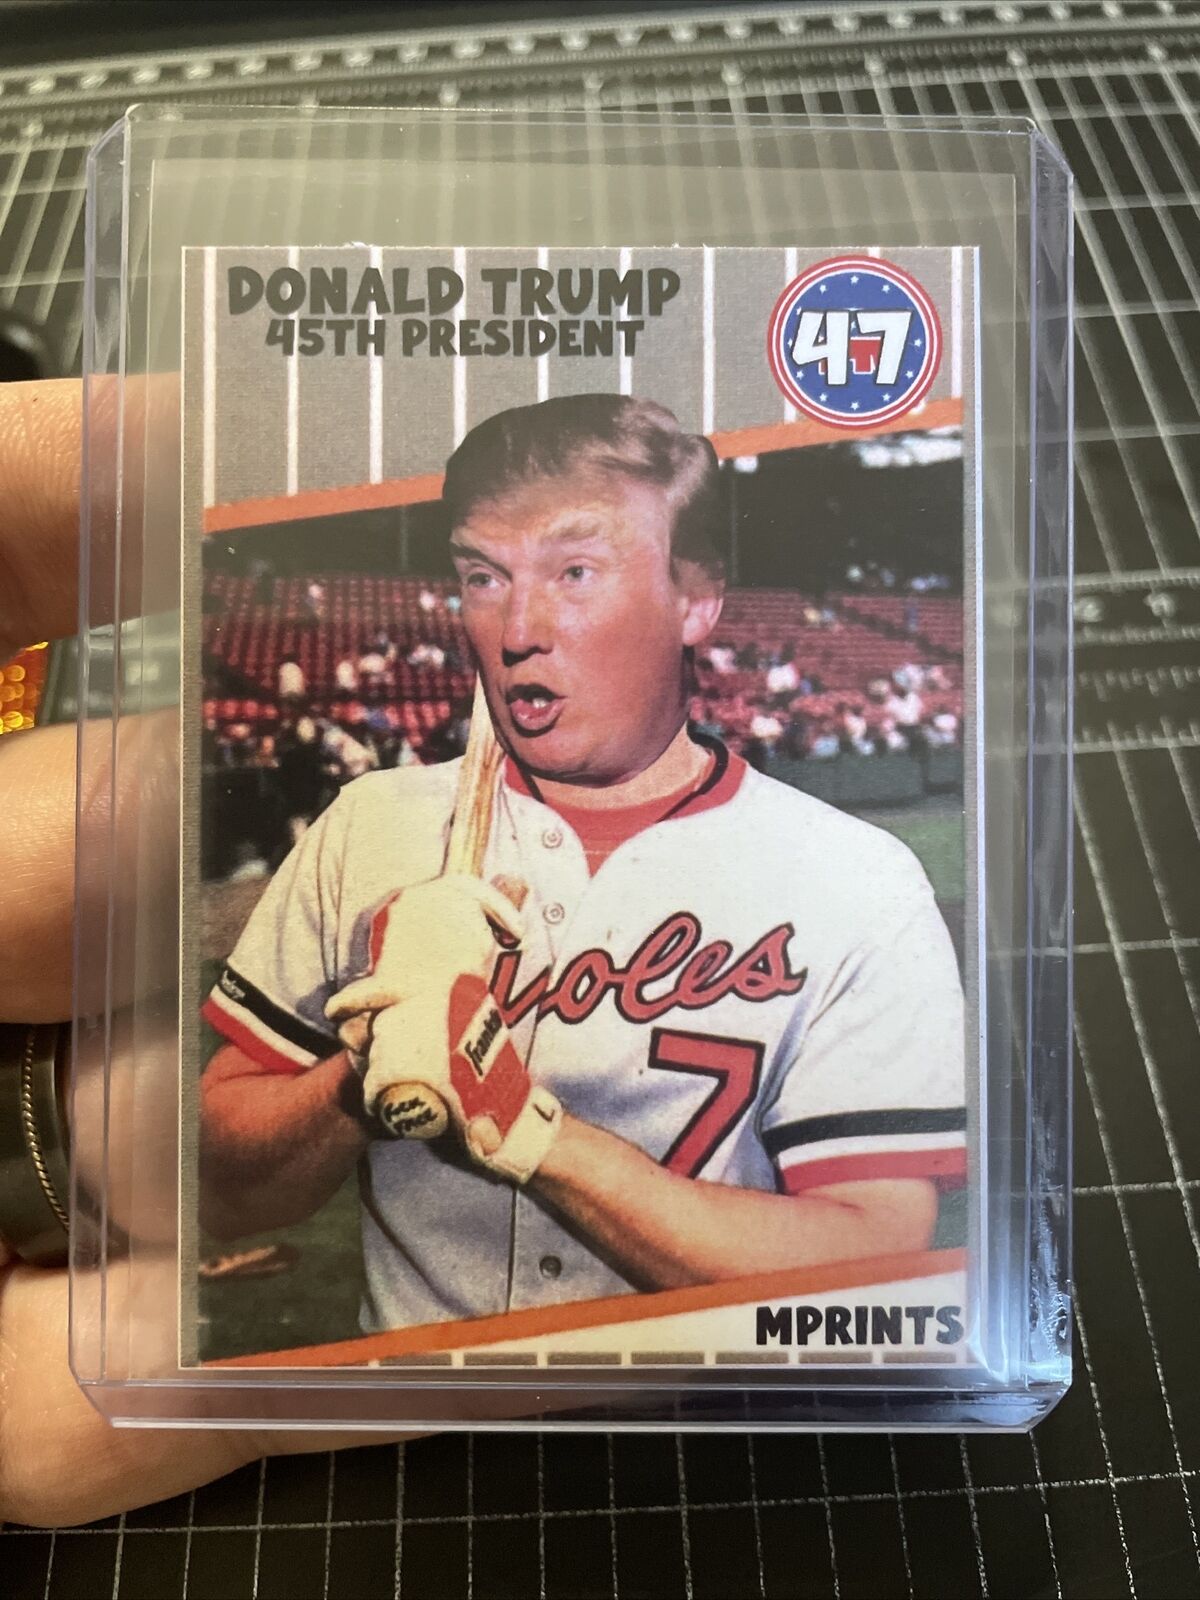 Donald Trump President 45 F-FACE PARODY Baseball Card By MPRINTS